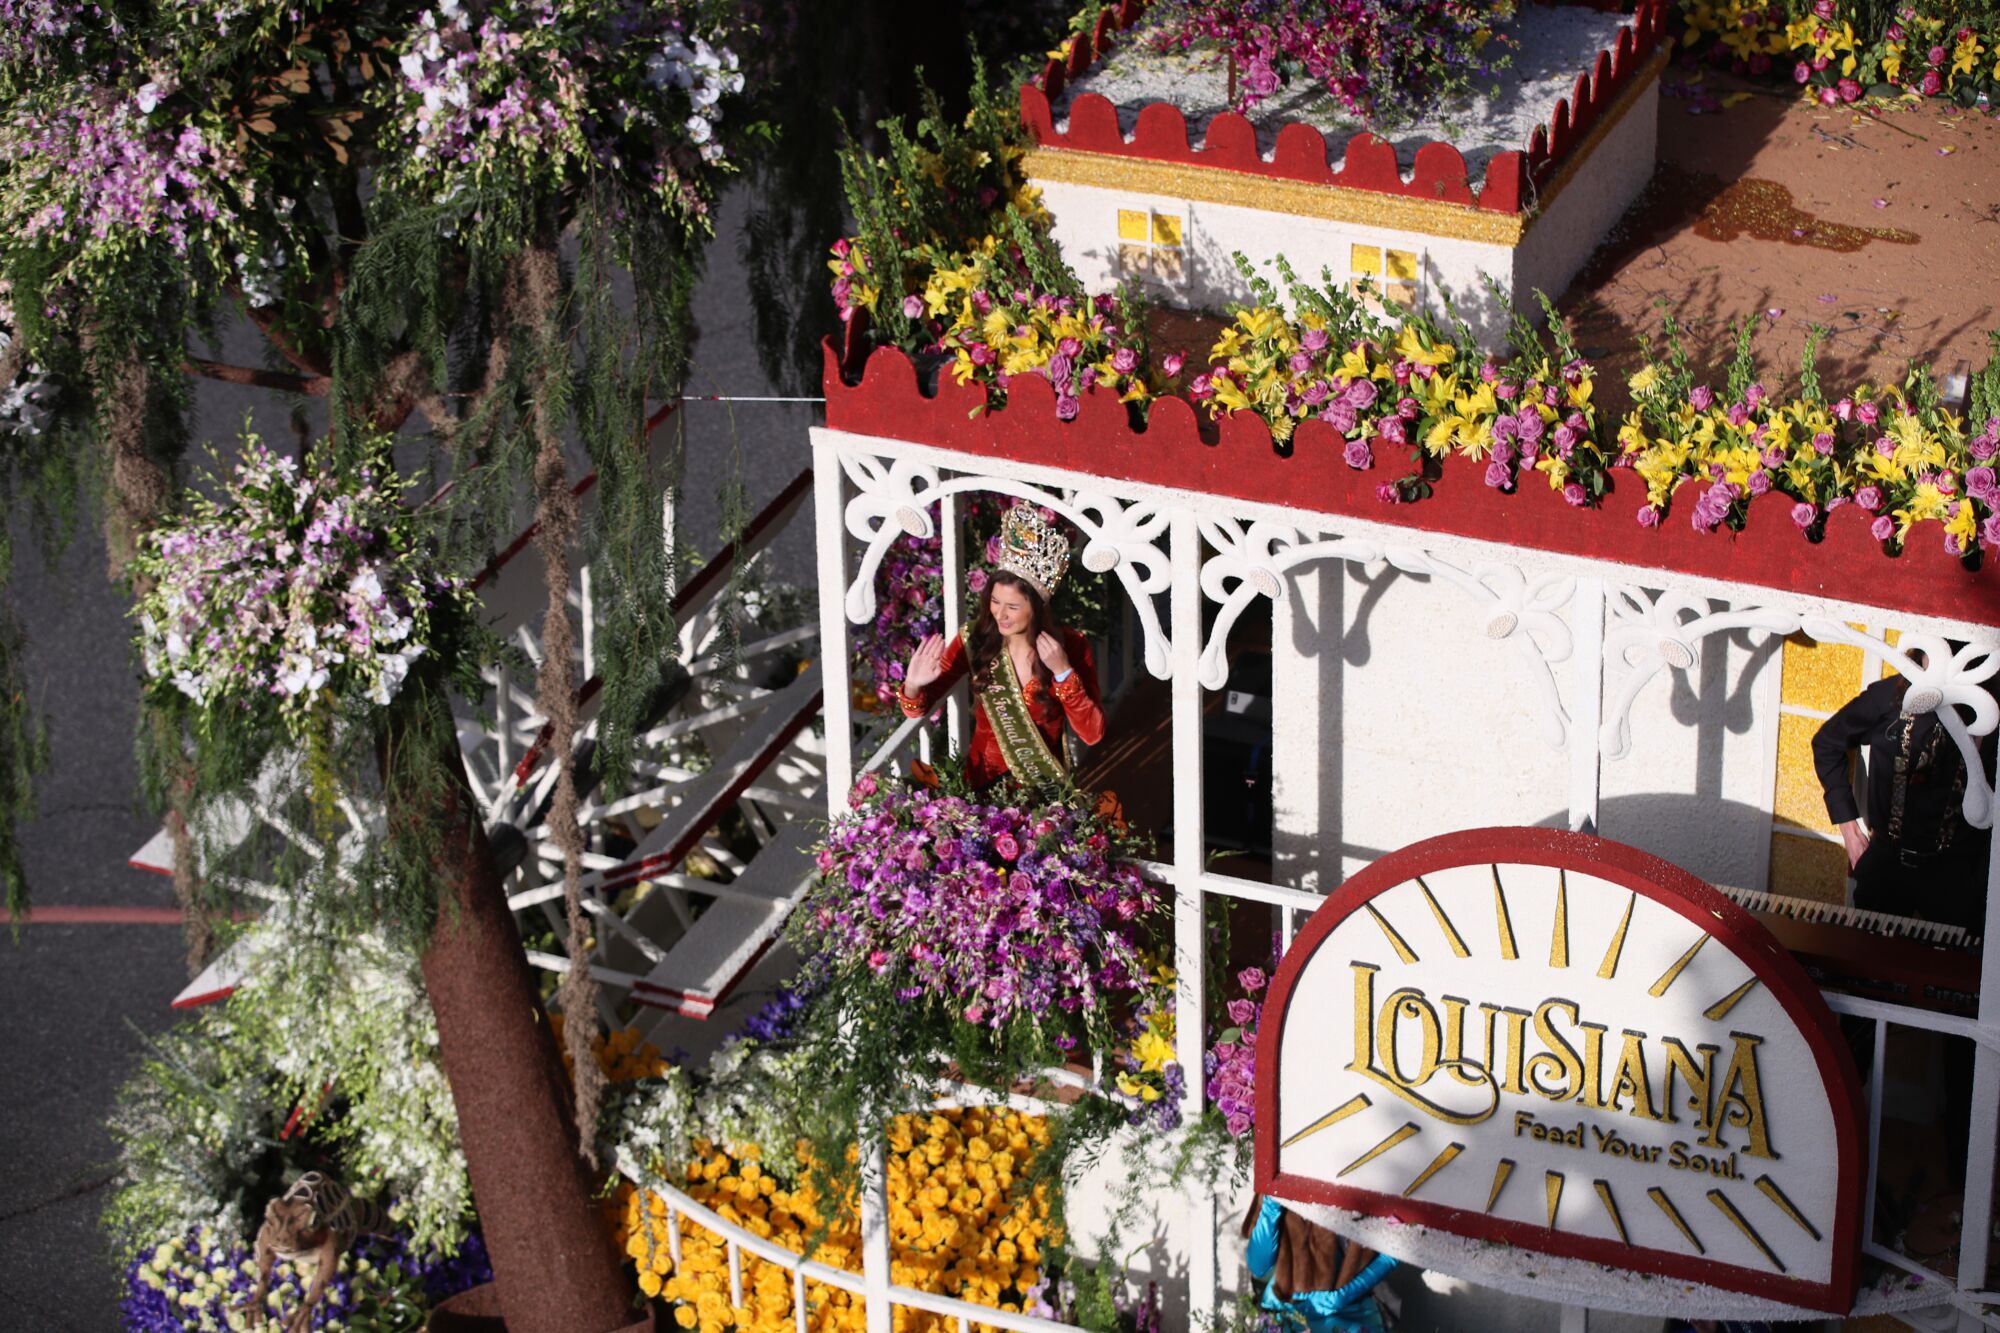 Louisiana Tourism's float.